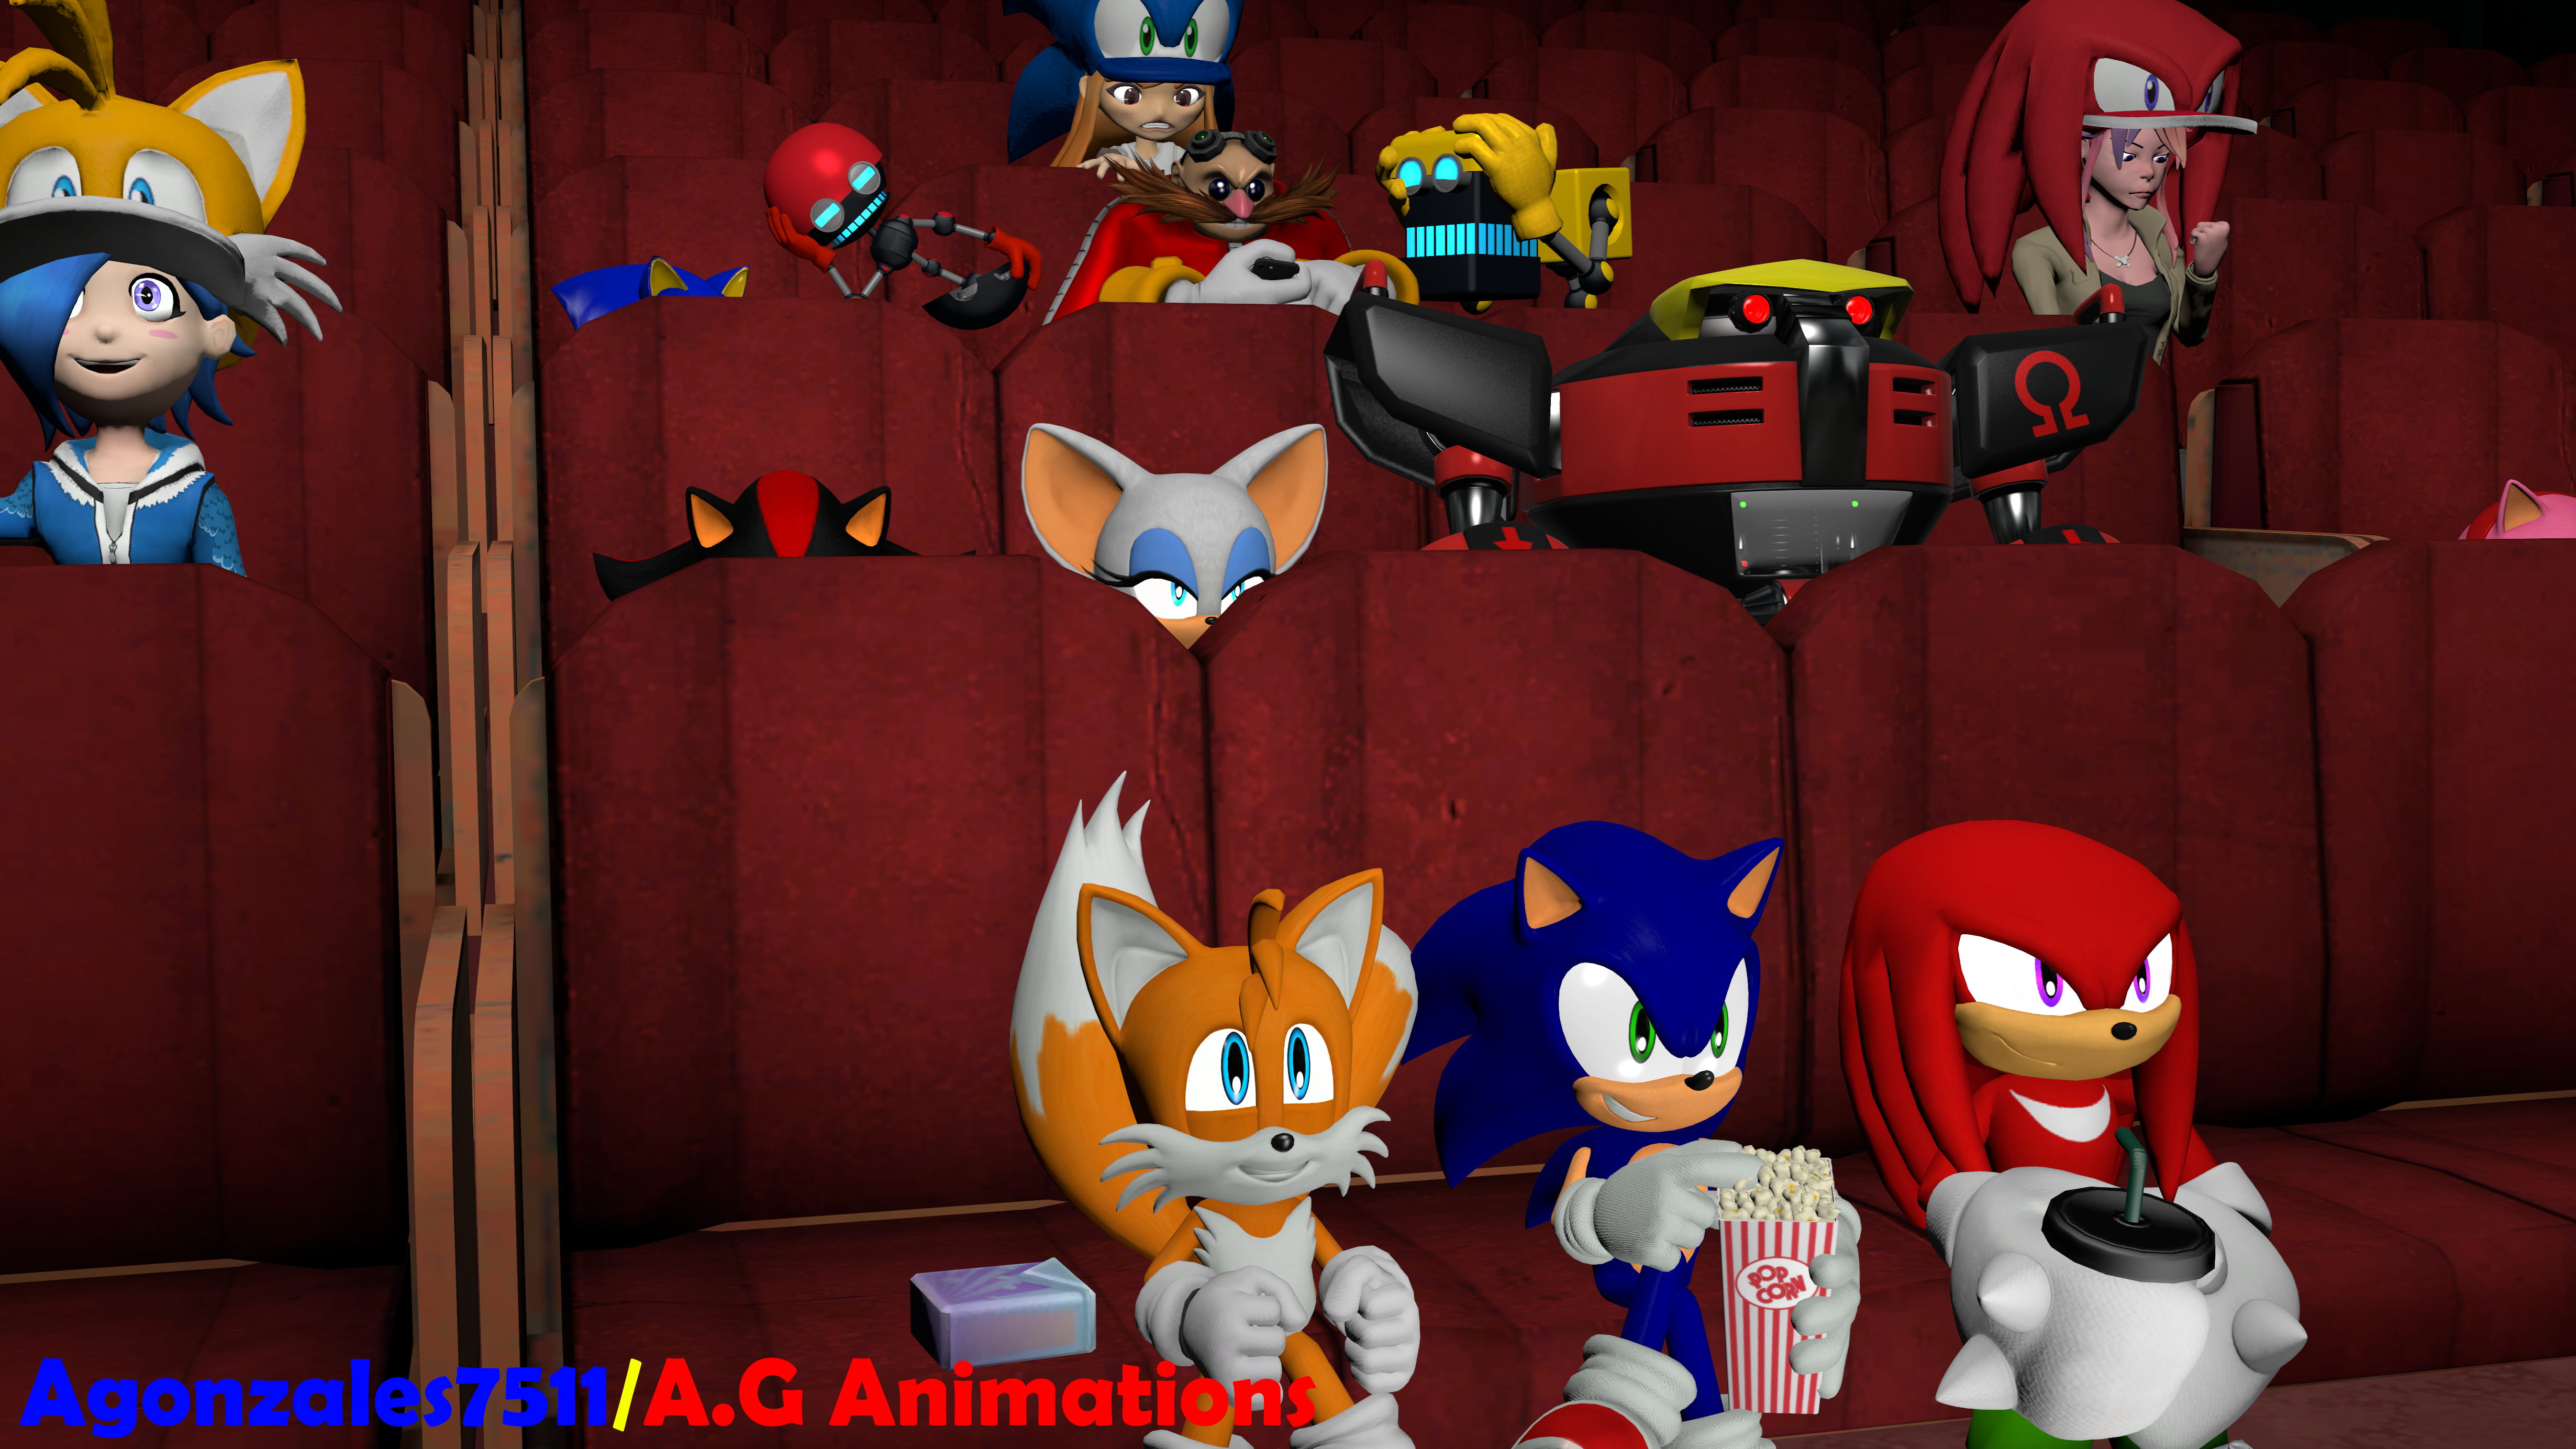 Sonic 2 o filme: A Aventura continua by ALIX2002 on DeviantArt